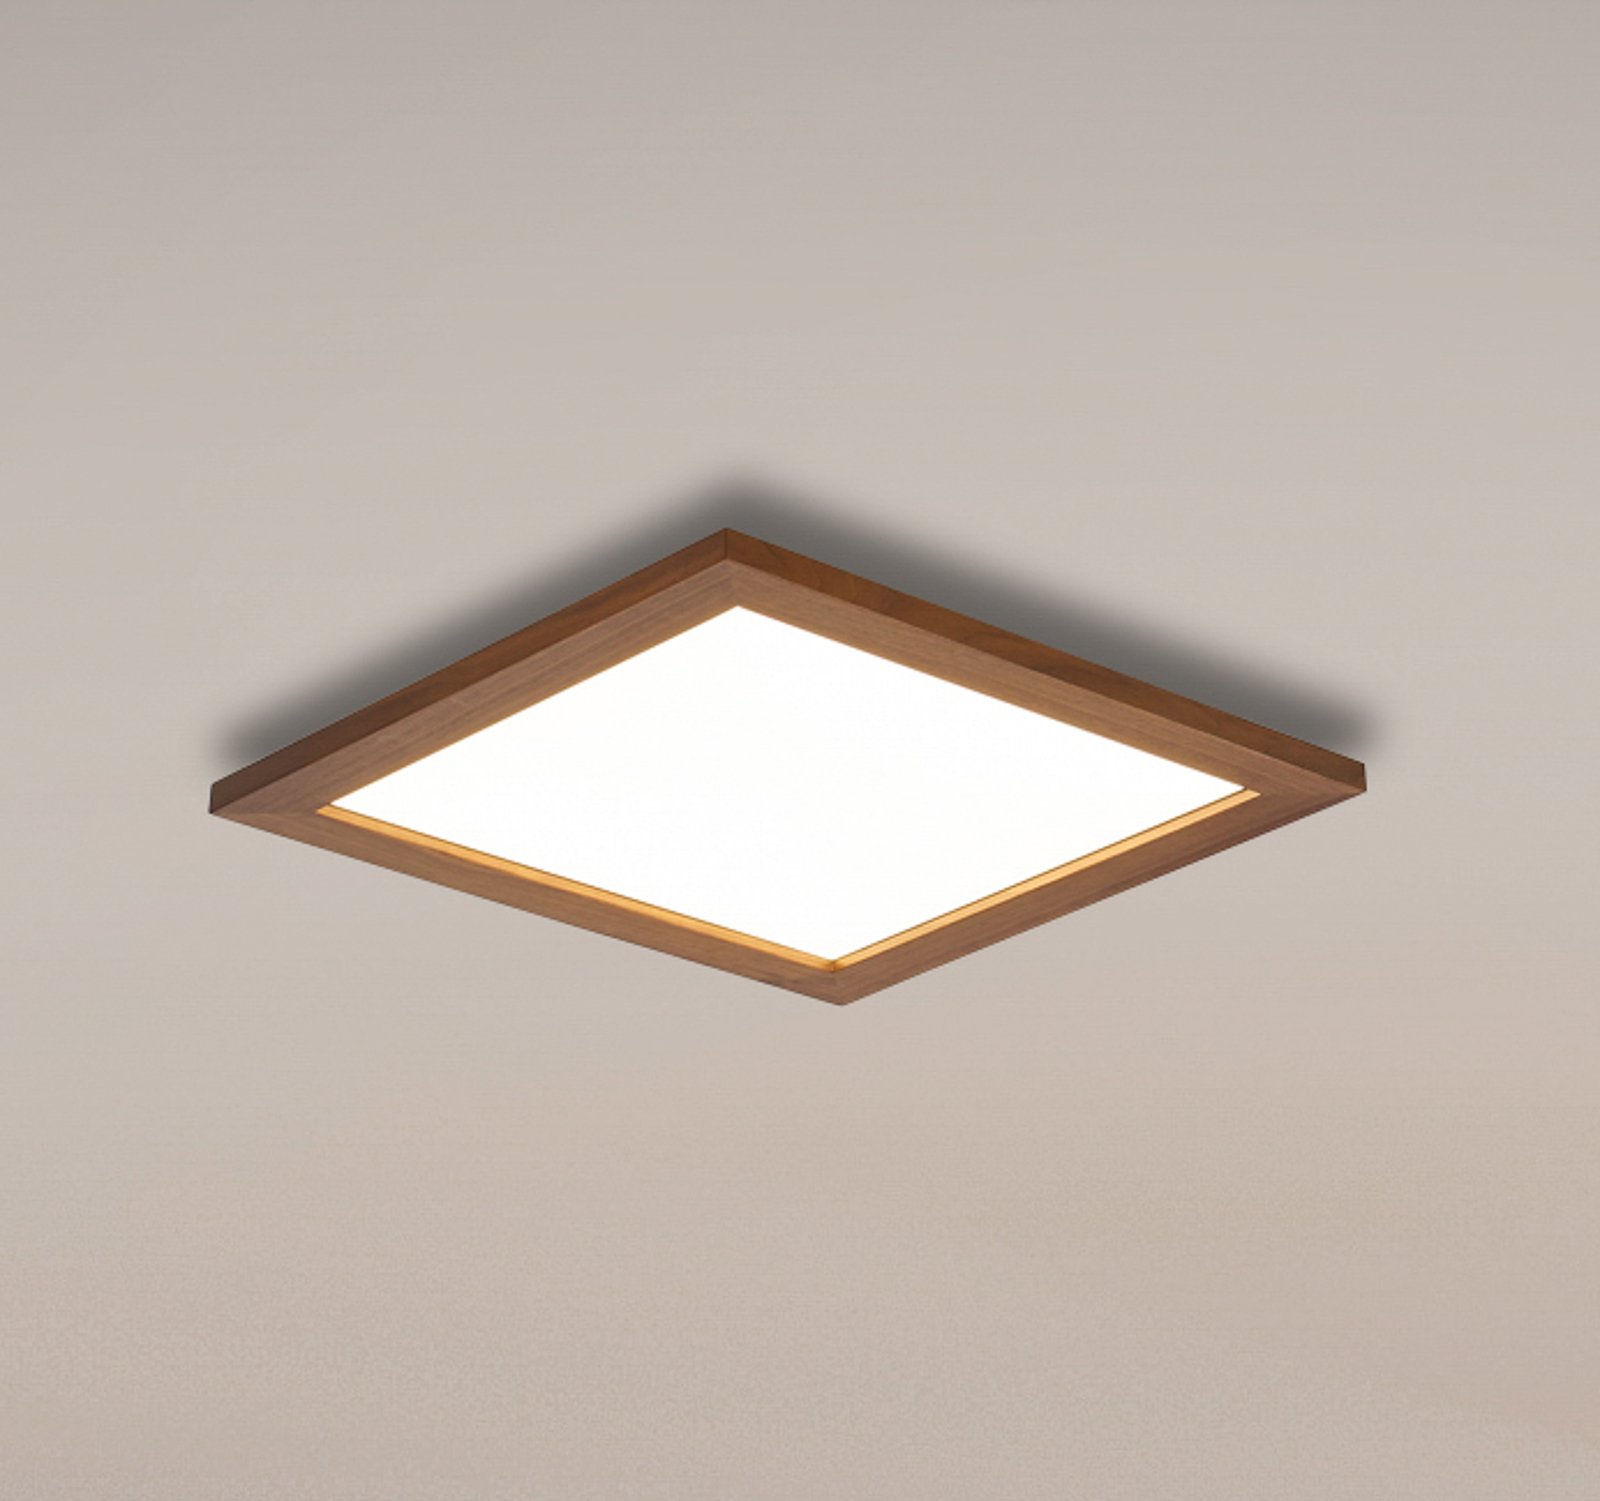 Panel LED Quitani Aurinor, orzech, 45 cm